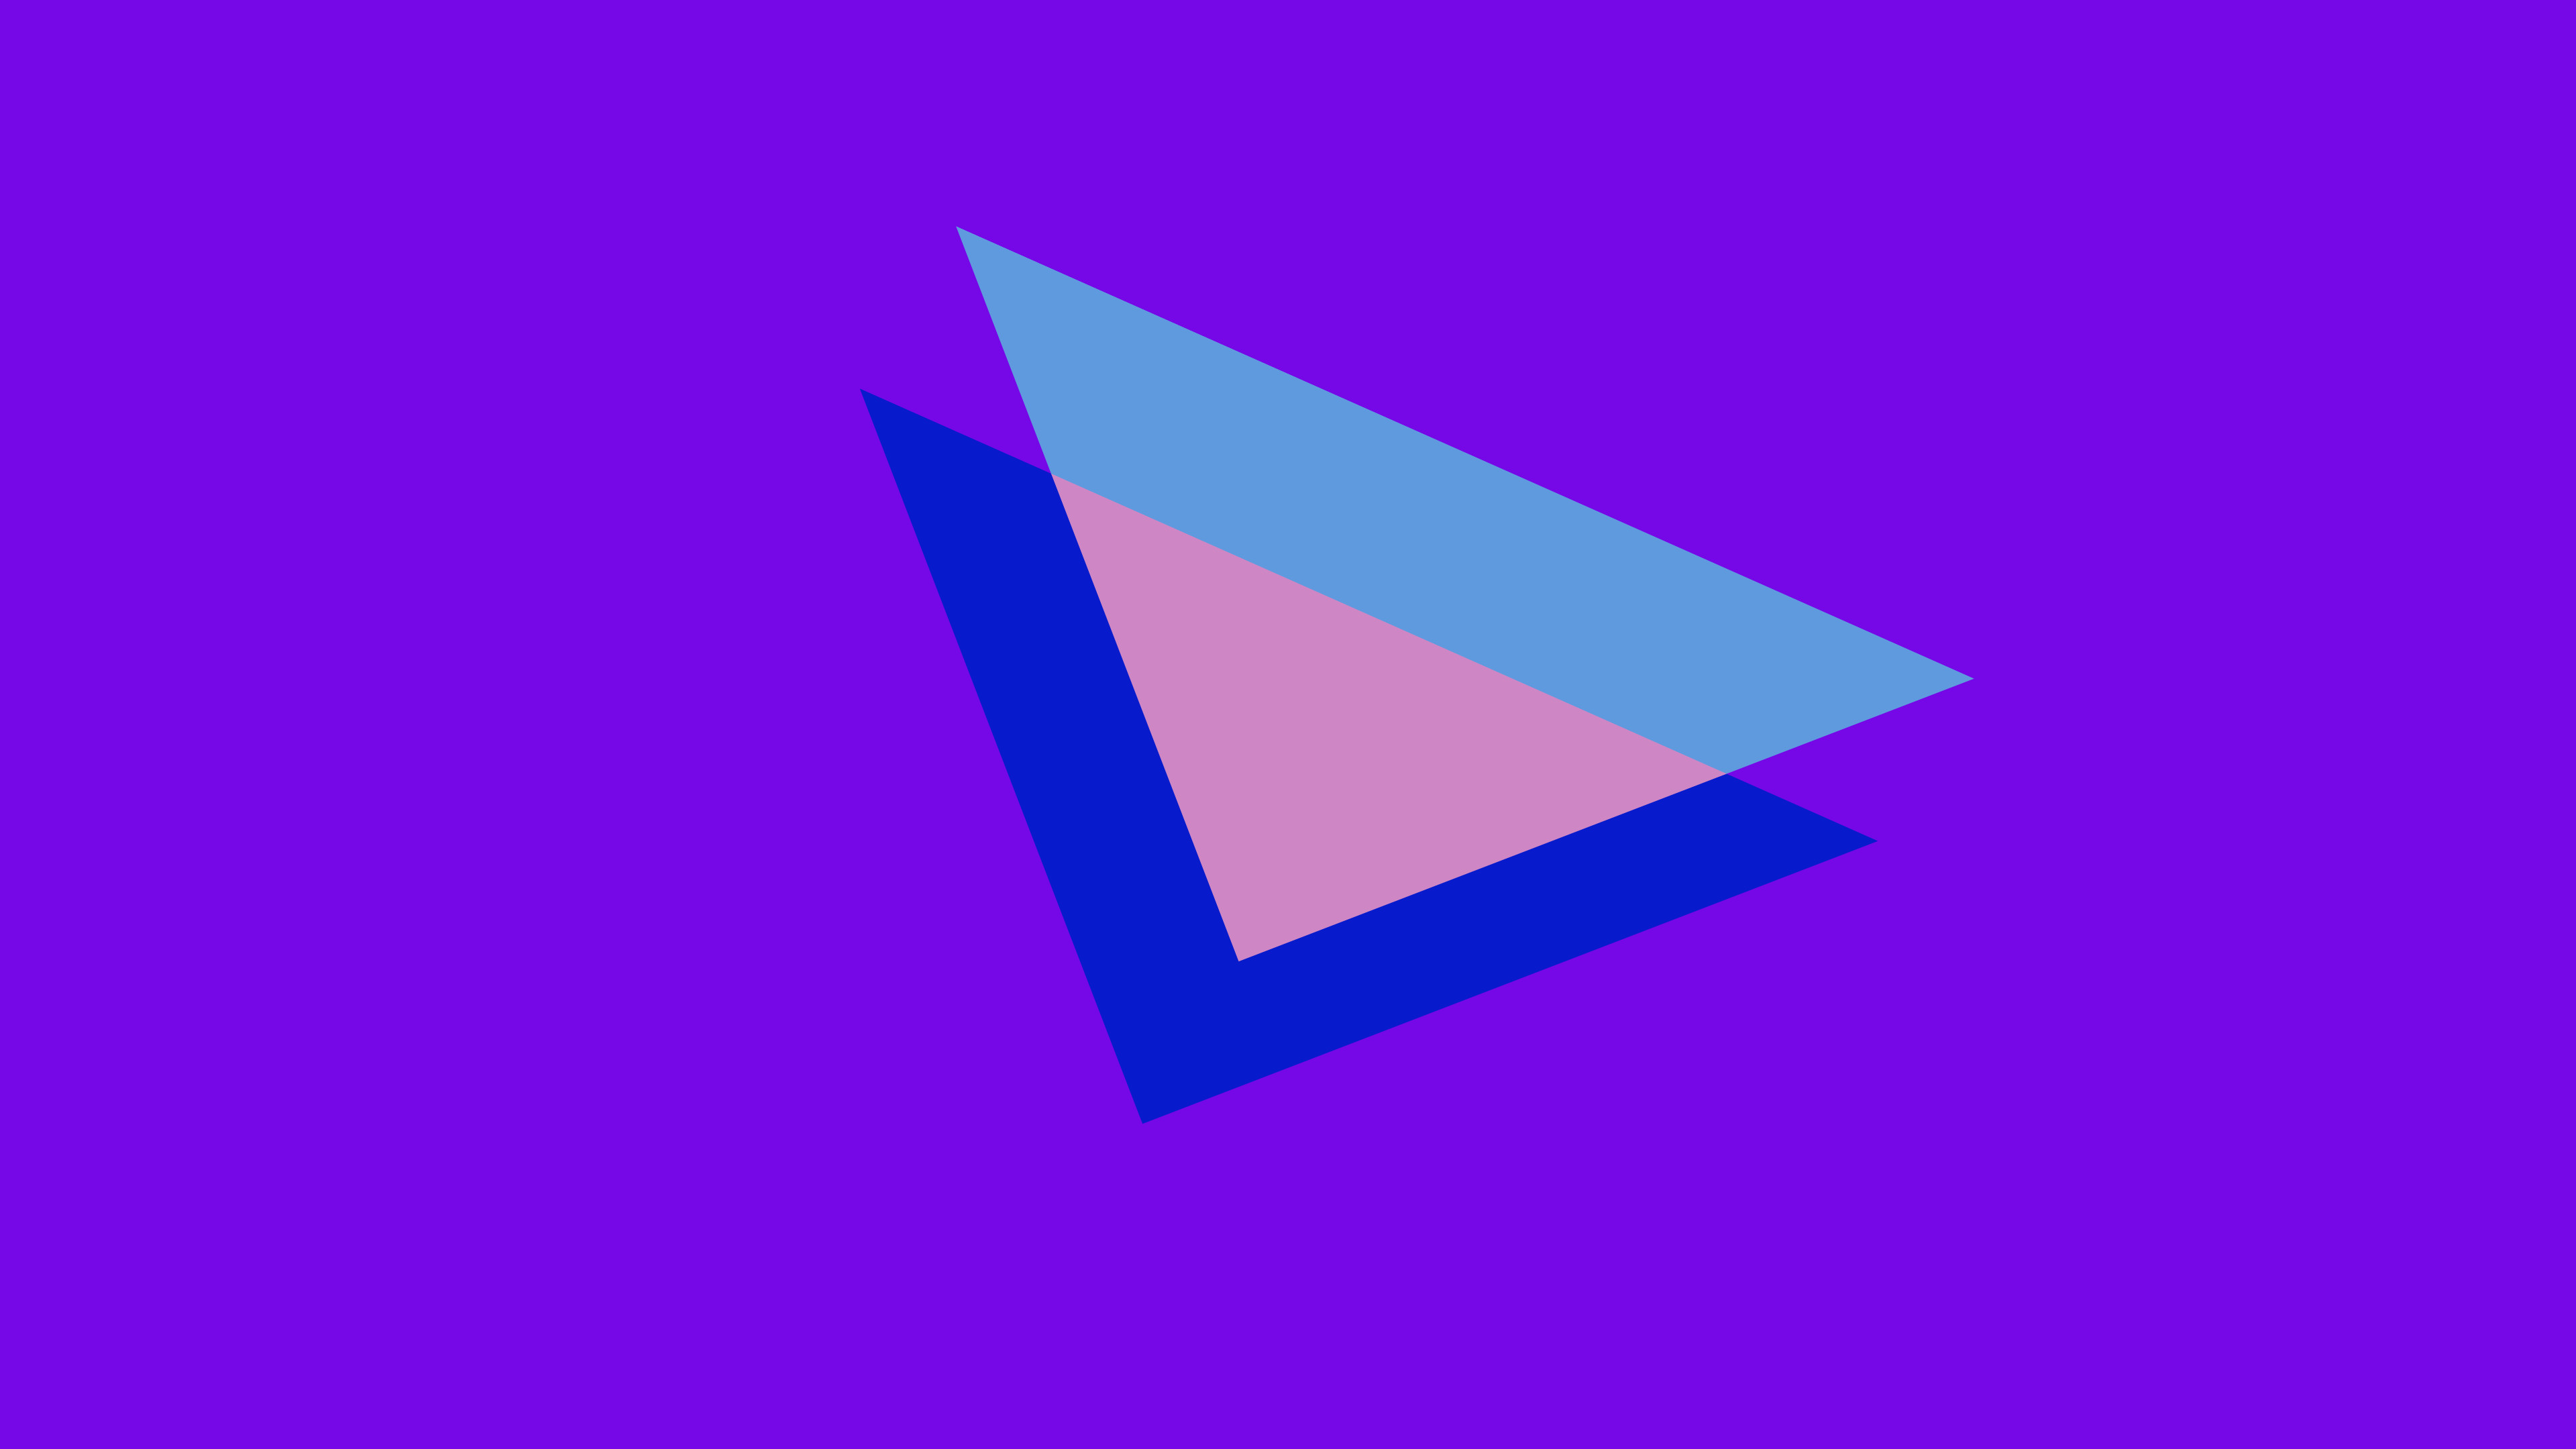 3840x2160 Minimal Simple Desktop Wallpaper 80s Triangles